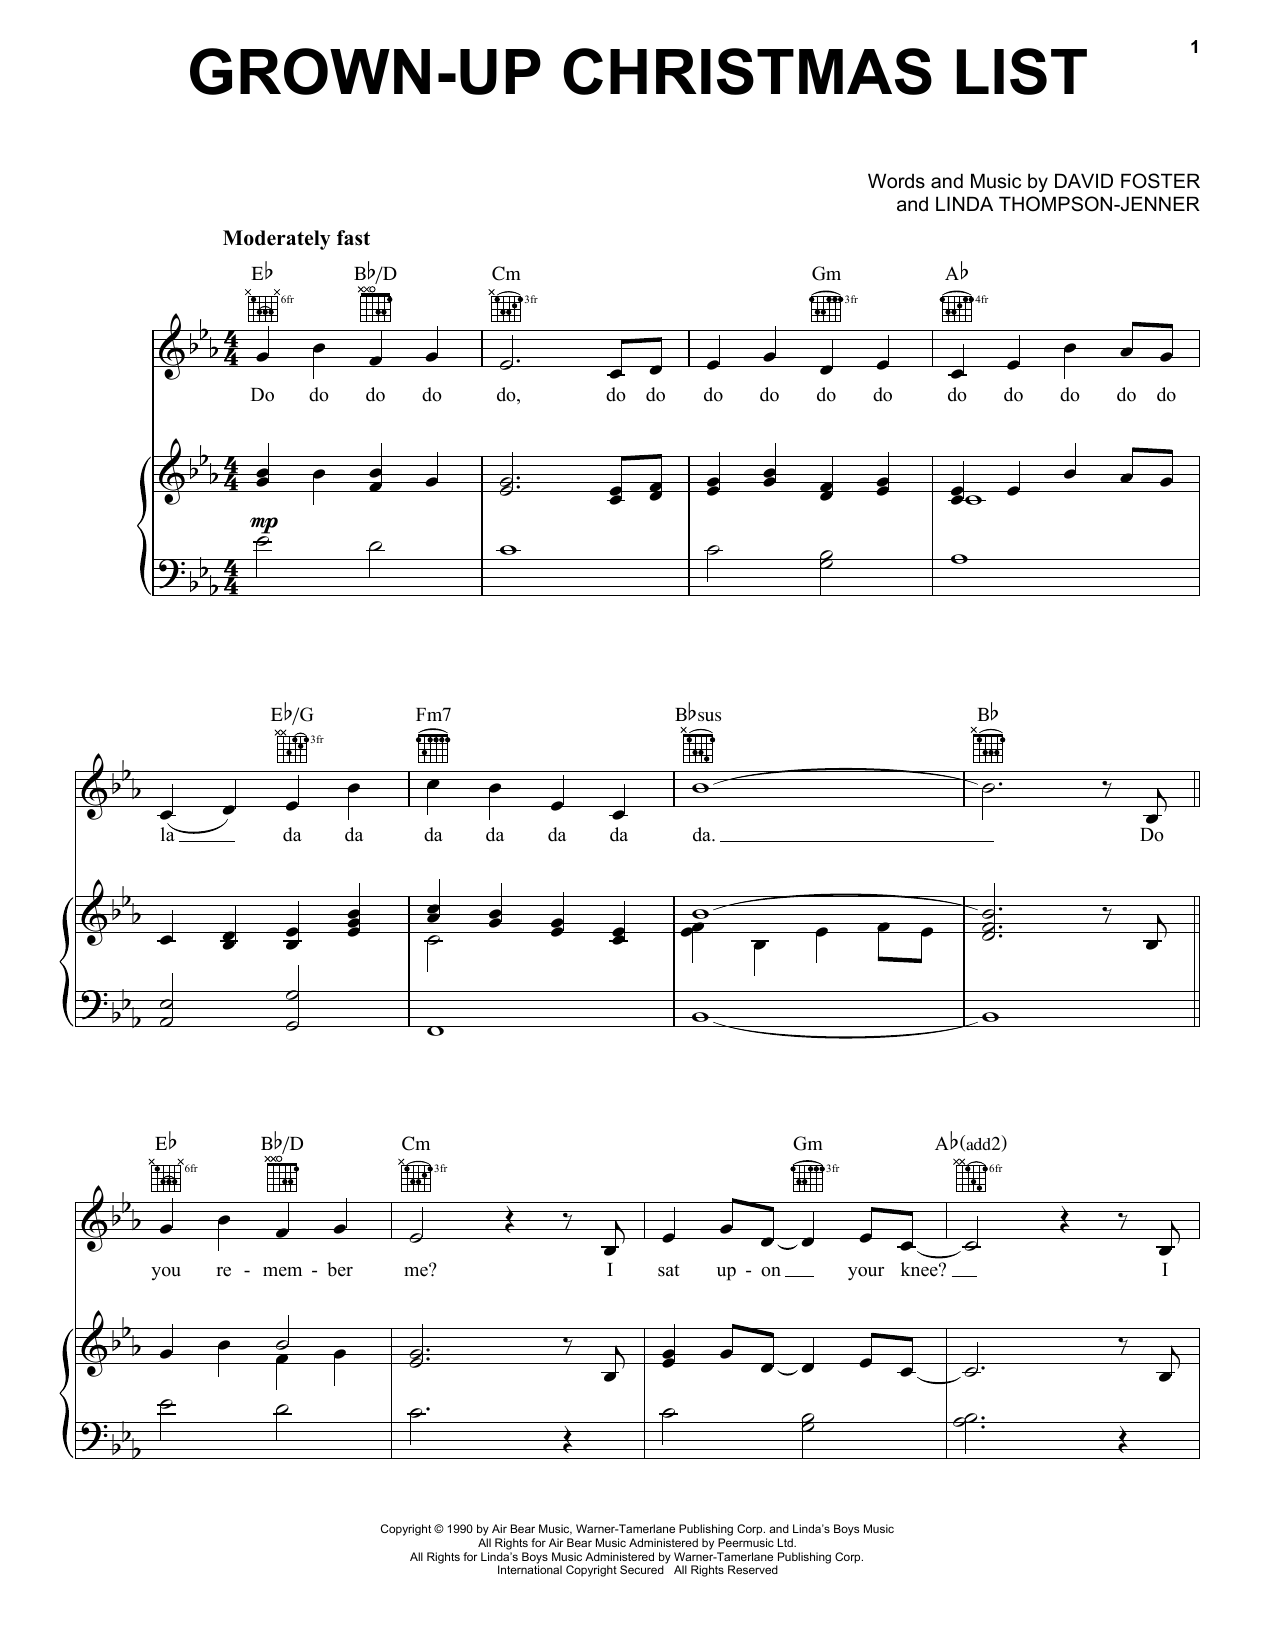 Pentatonix Grown-Up Christmas List sheet music notes and chords. Download Printable PDF.